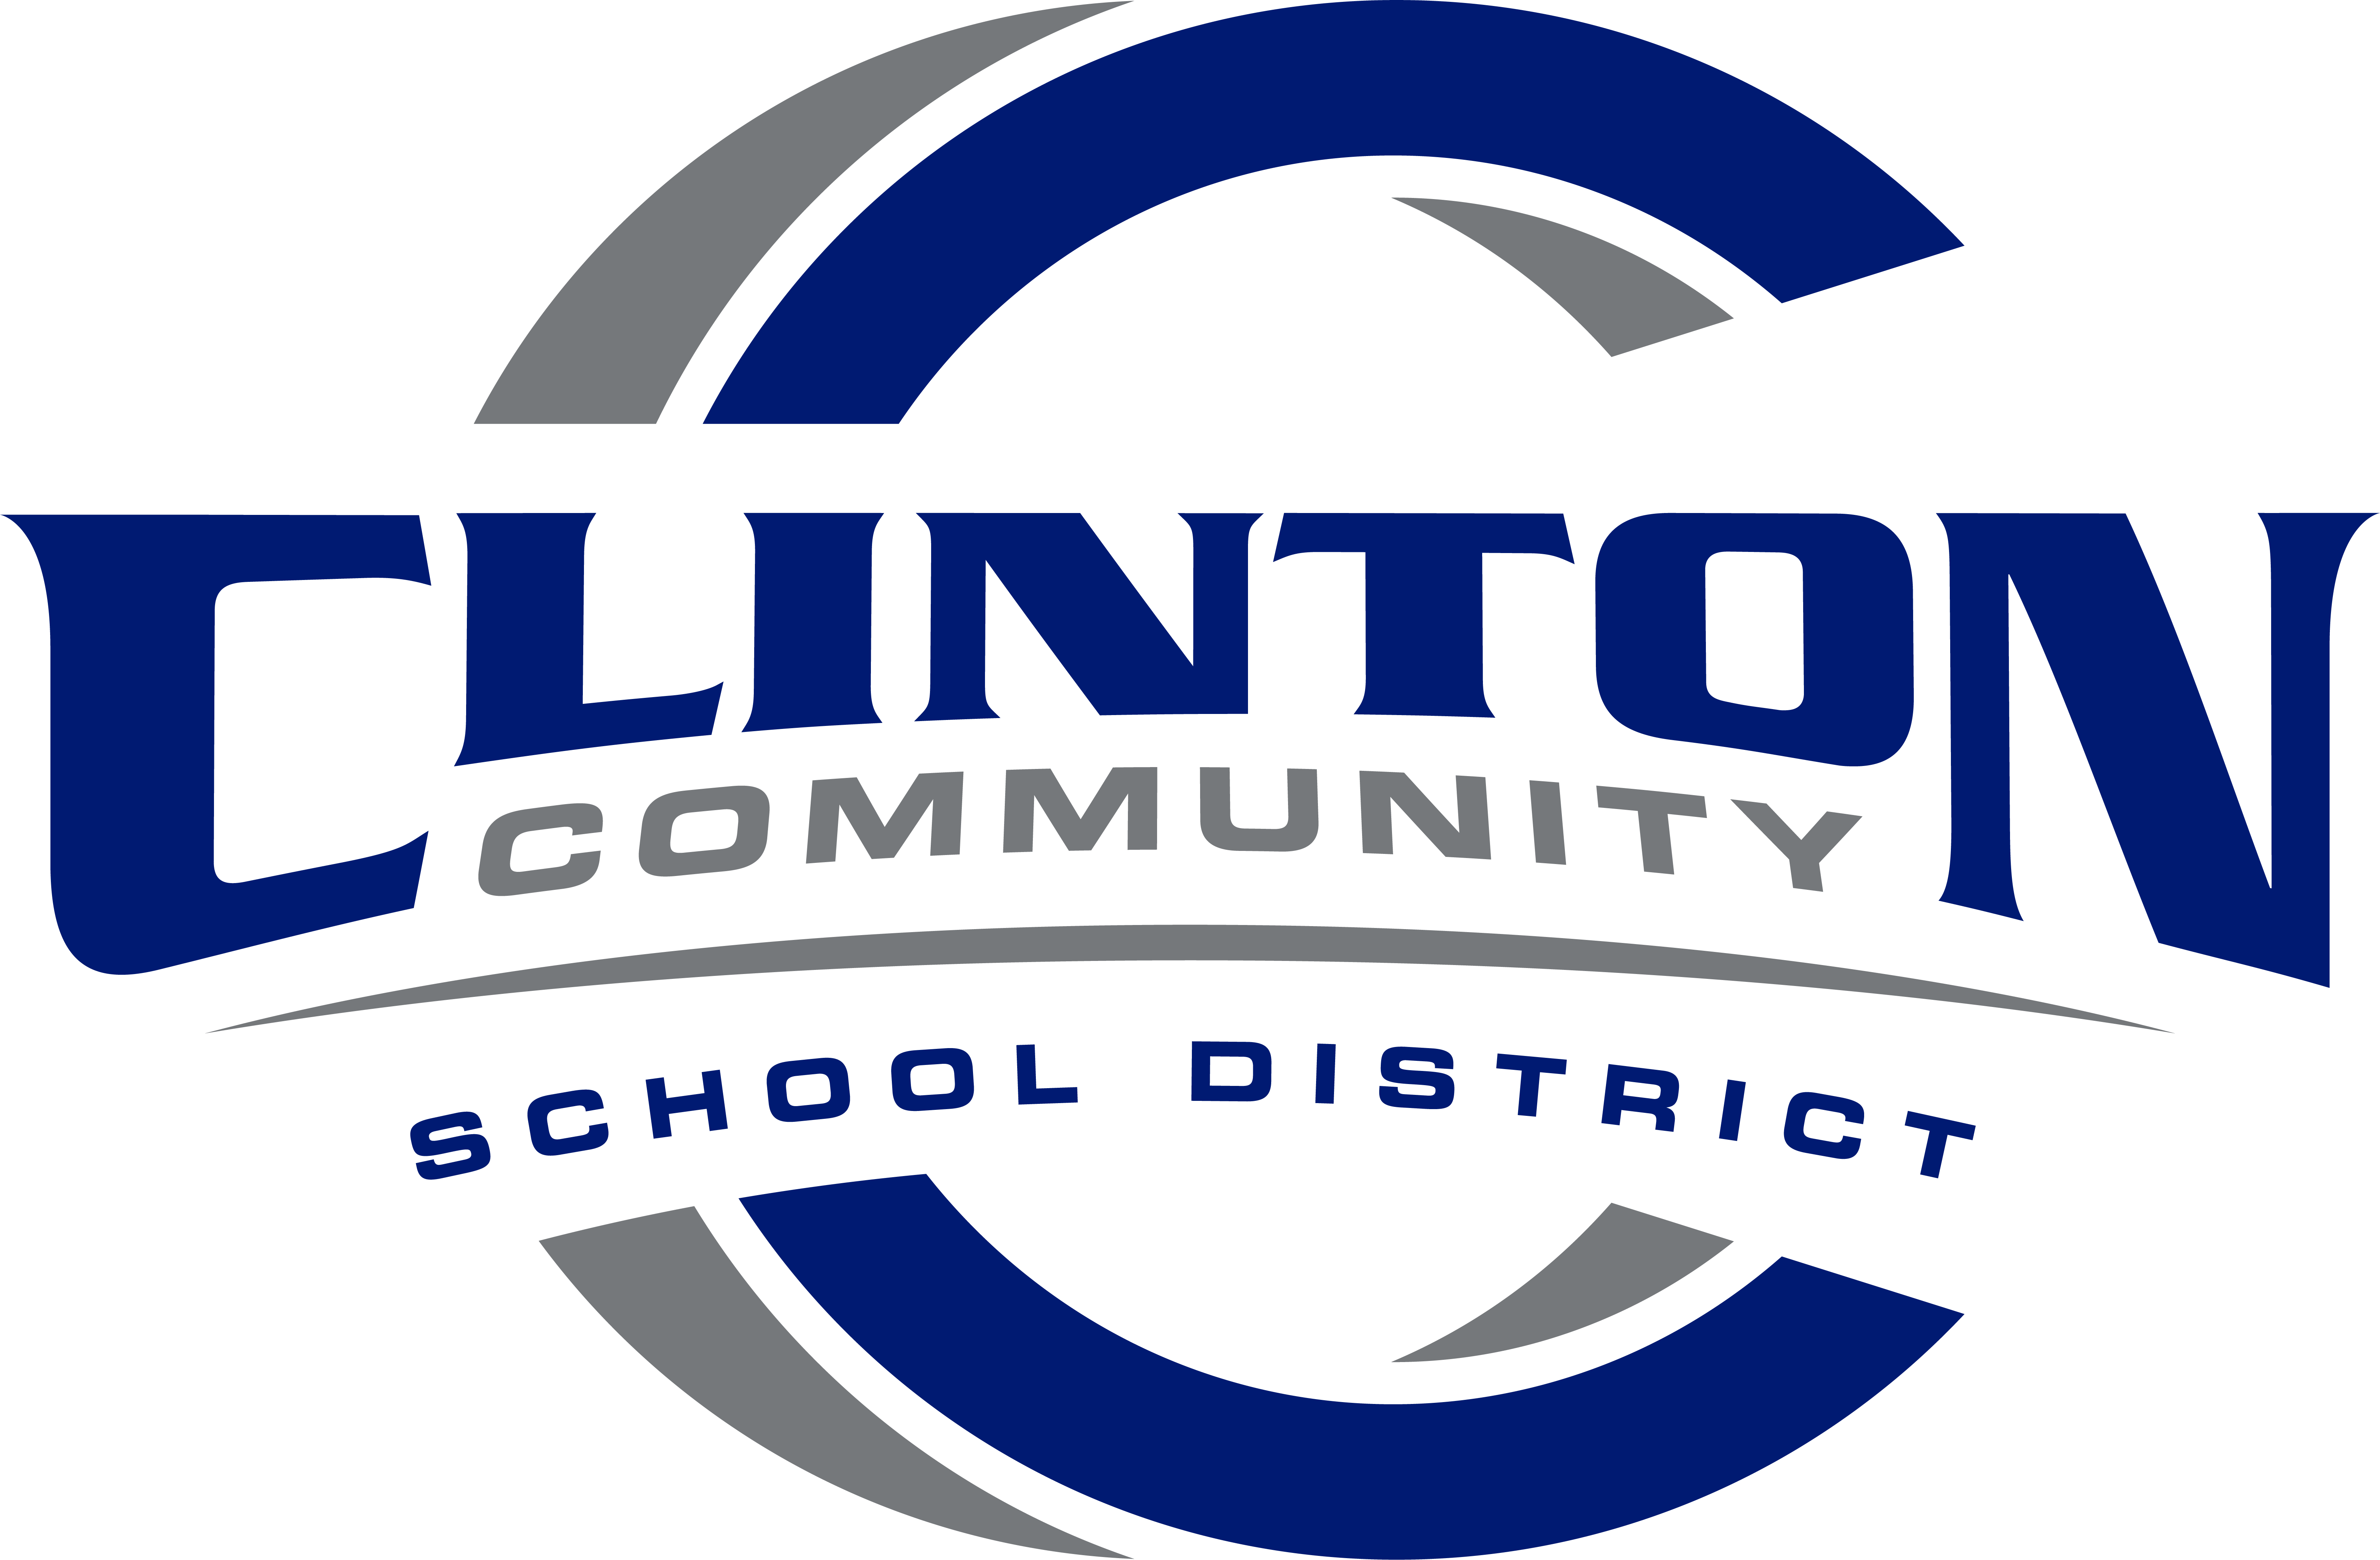 Clinton Community School District's Logo